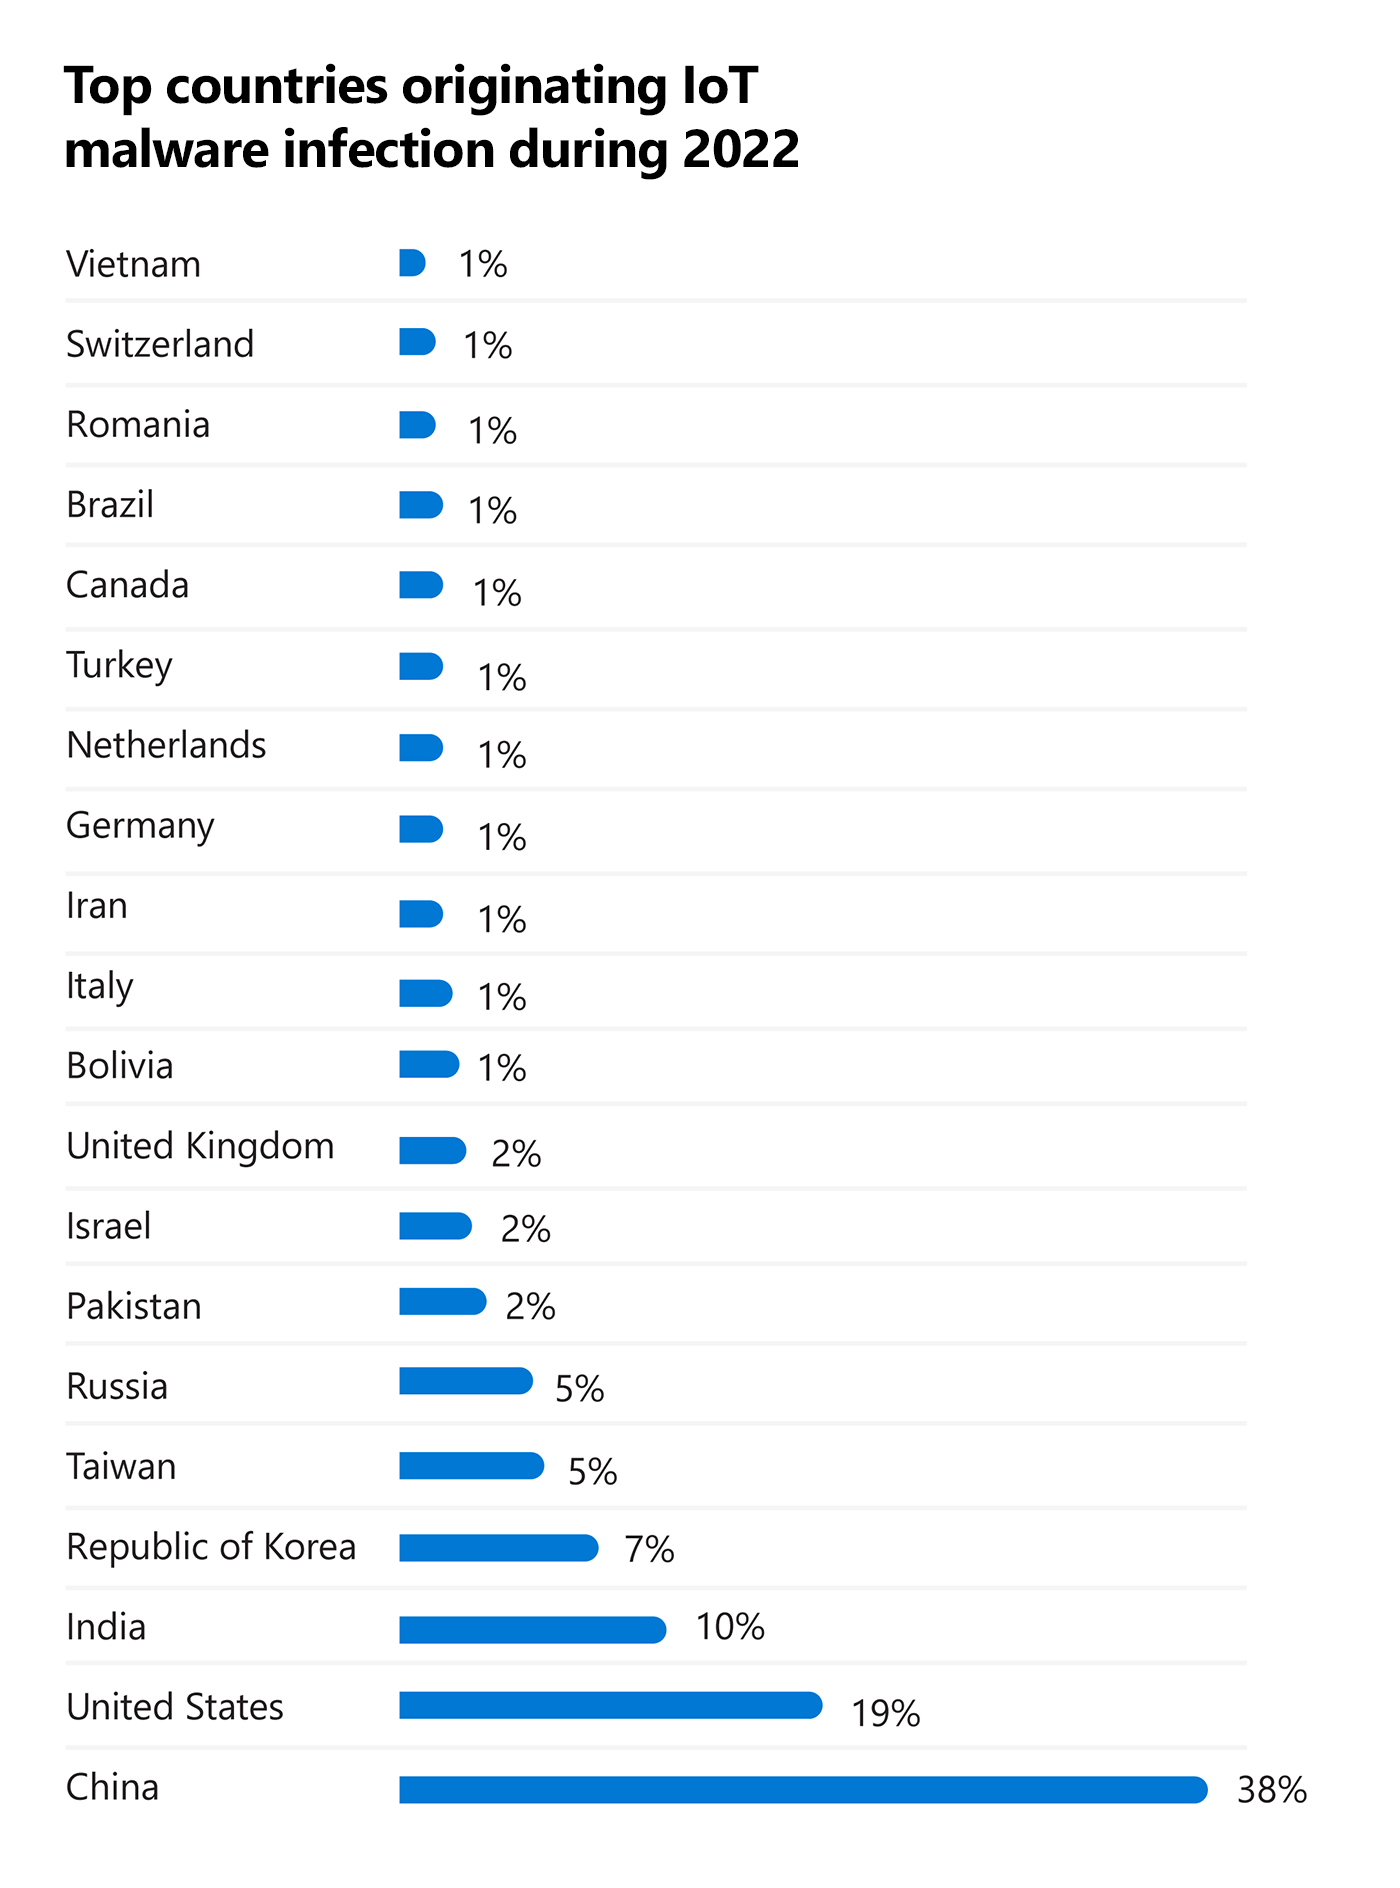 Breakdown of top countries originating IoT malware